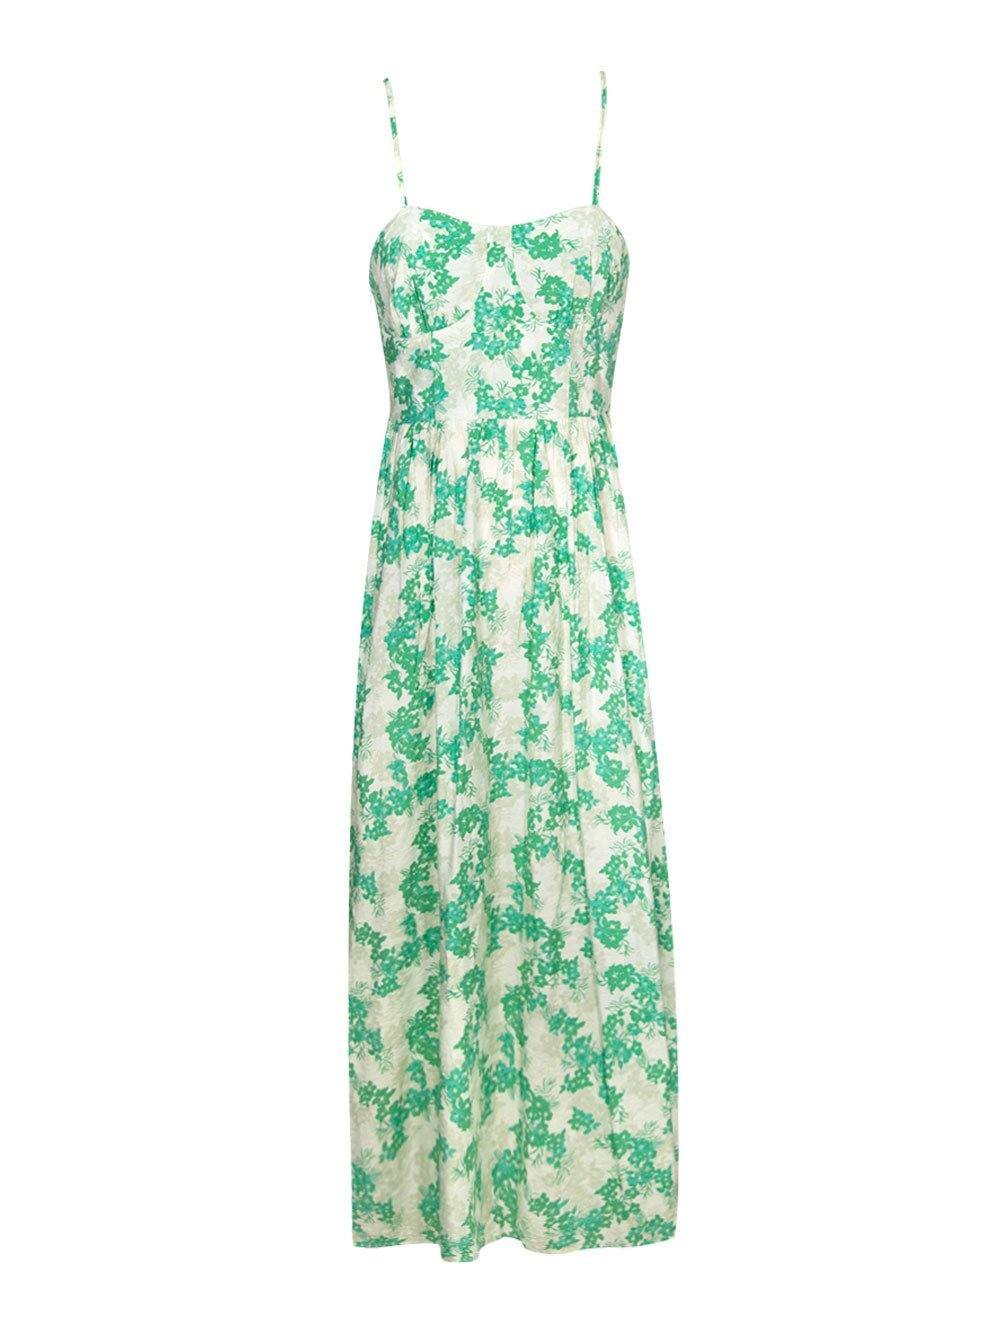 Spaghetti Strap Maxi Dress - Green Floral Prints - OCEAN MYSTERY